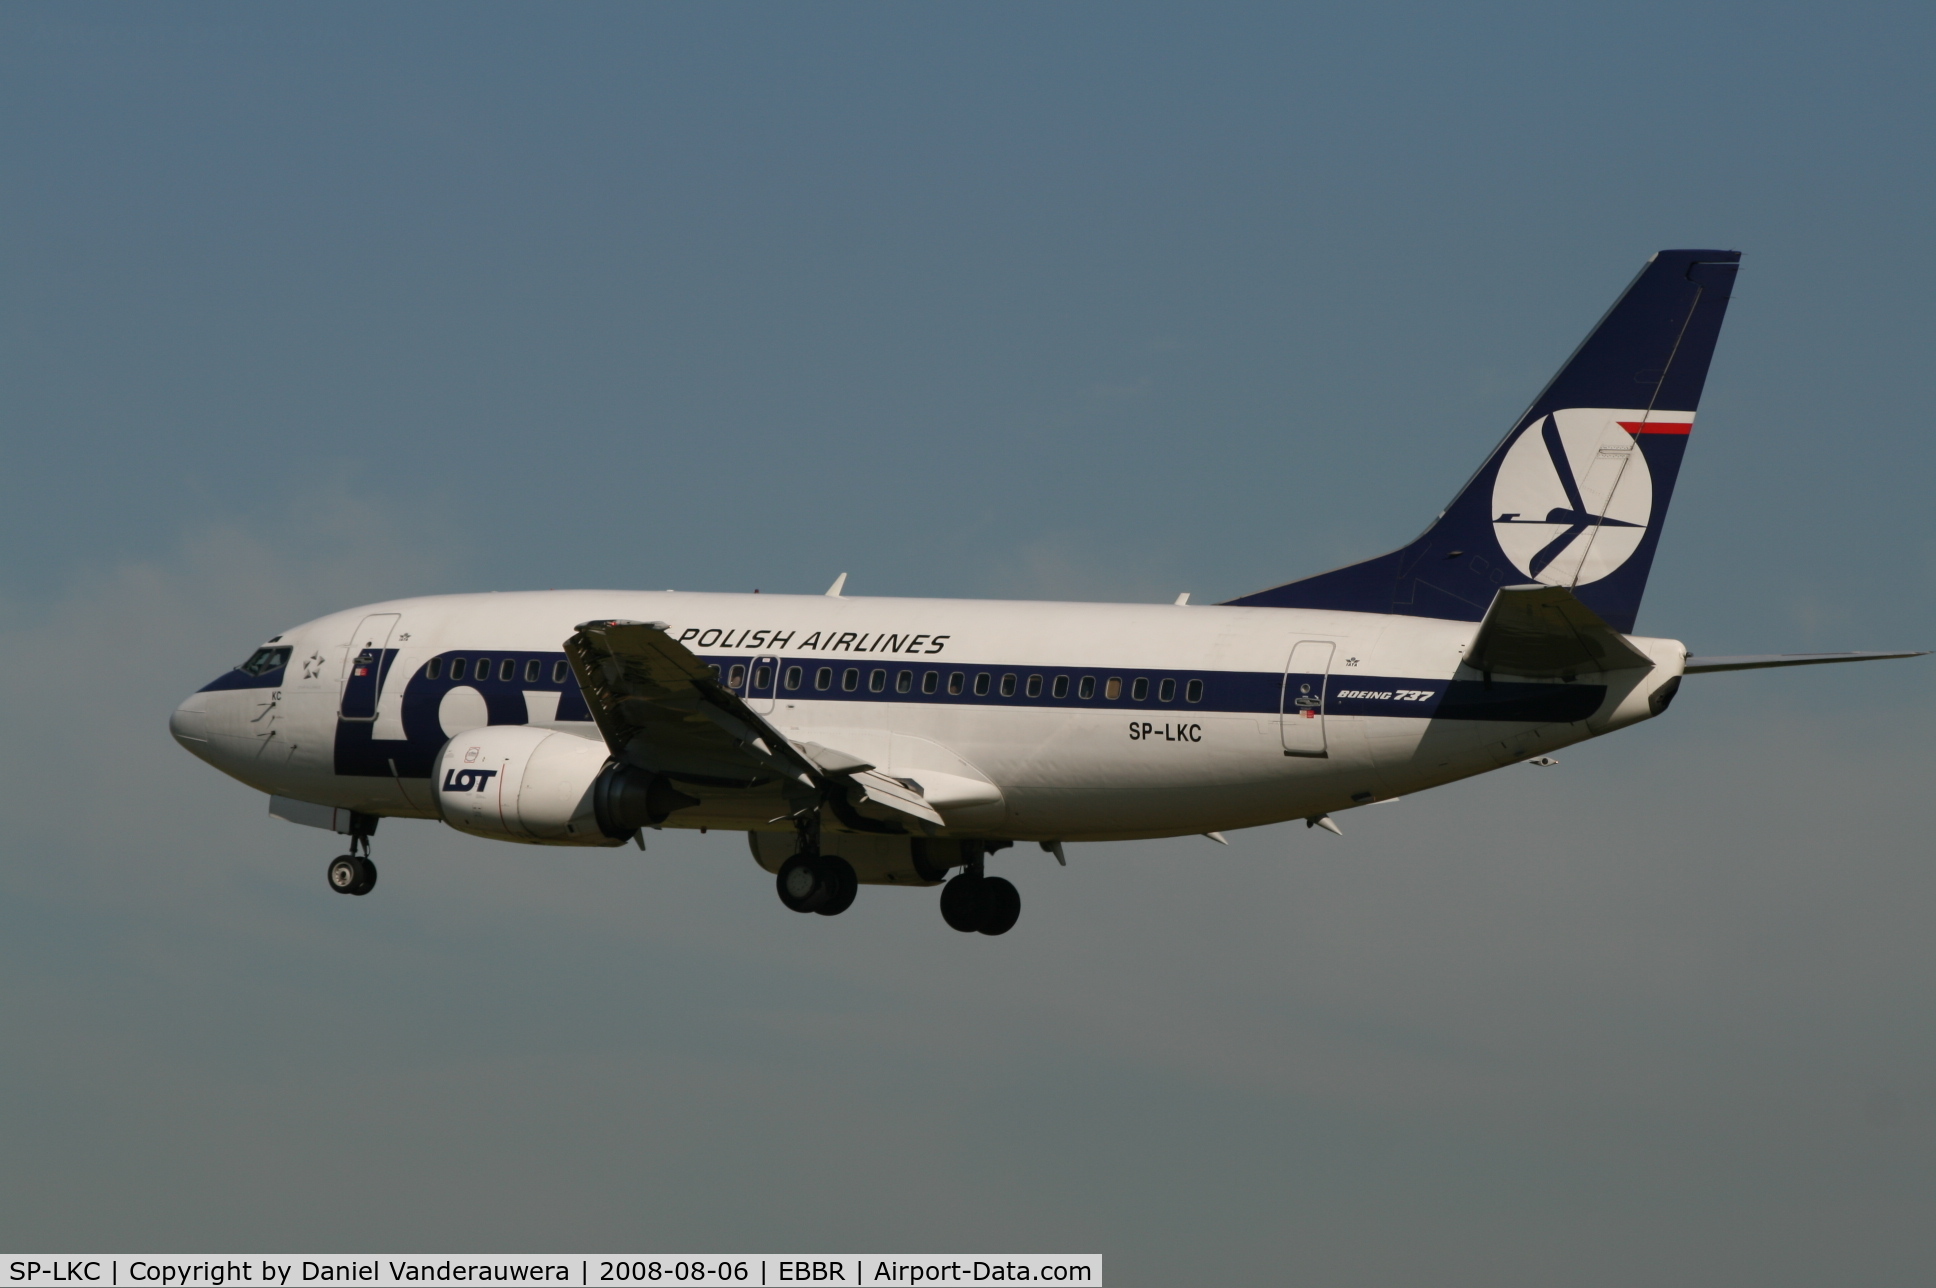 SP-LKC, 1992 Boeing 737-55D C/N 27418, flight LO235 is descending to rwy 25L